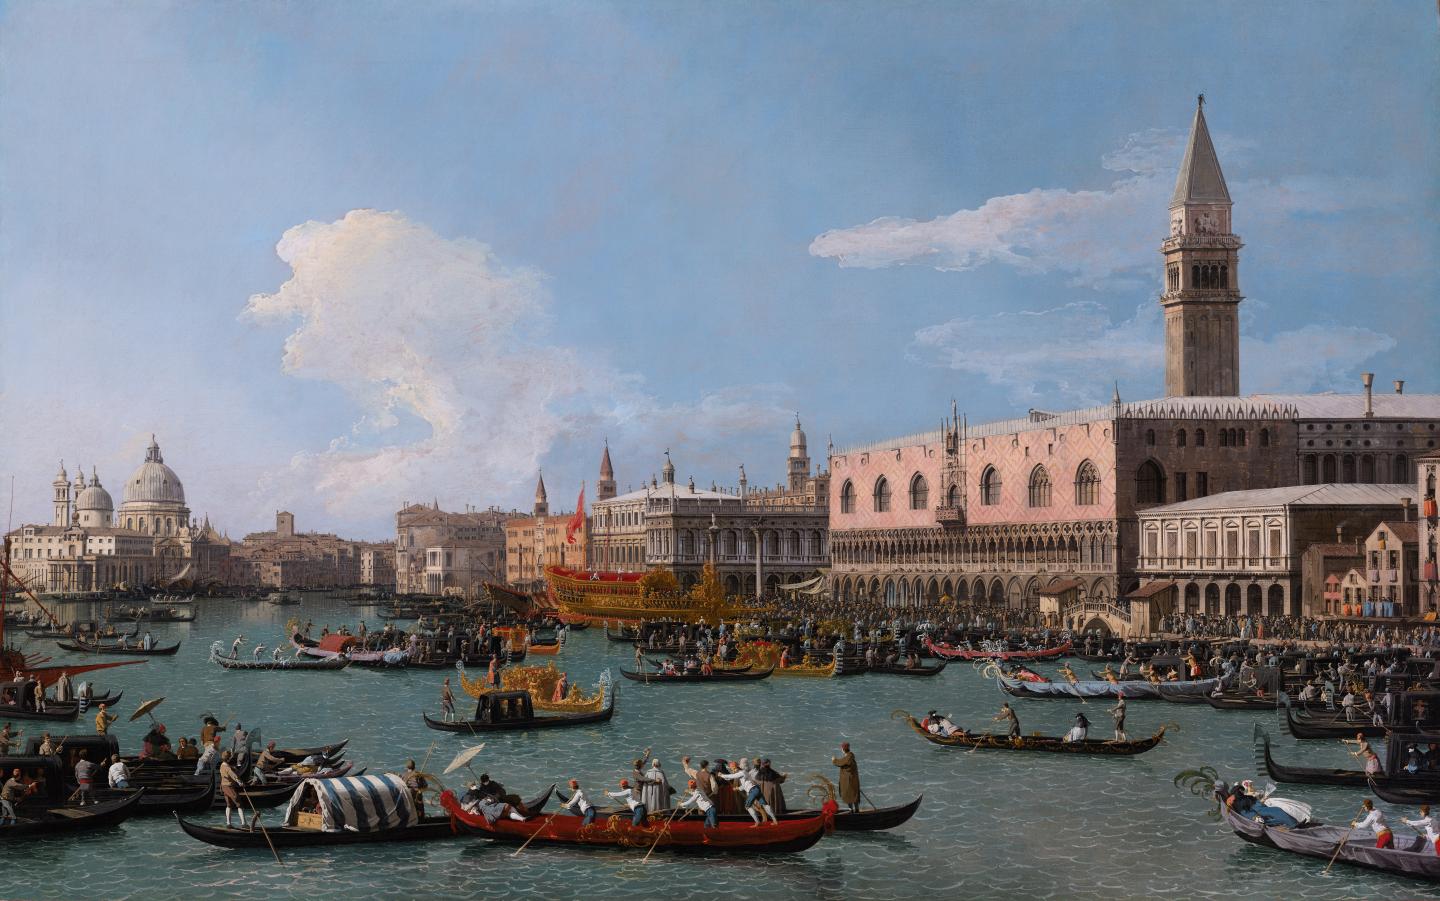 A regatta on the Grand Canal in Venice